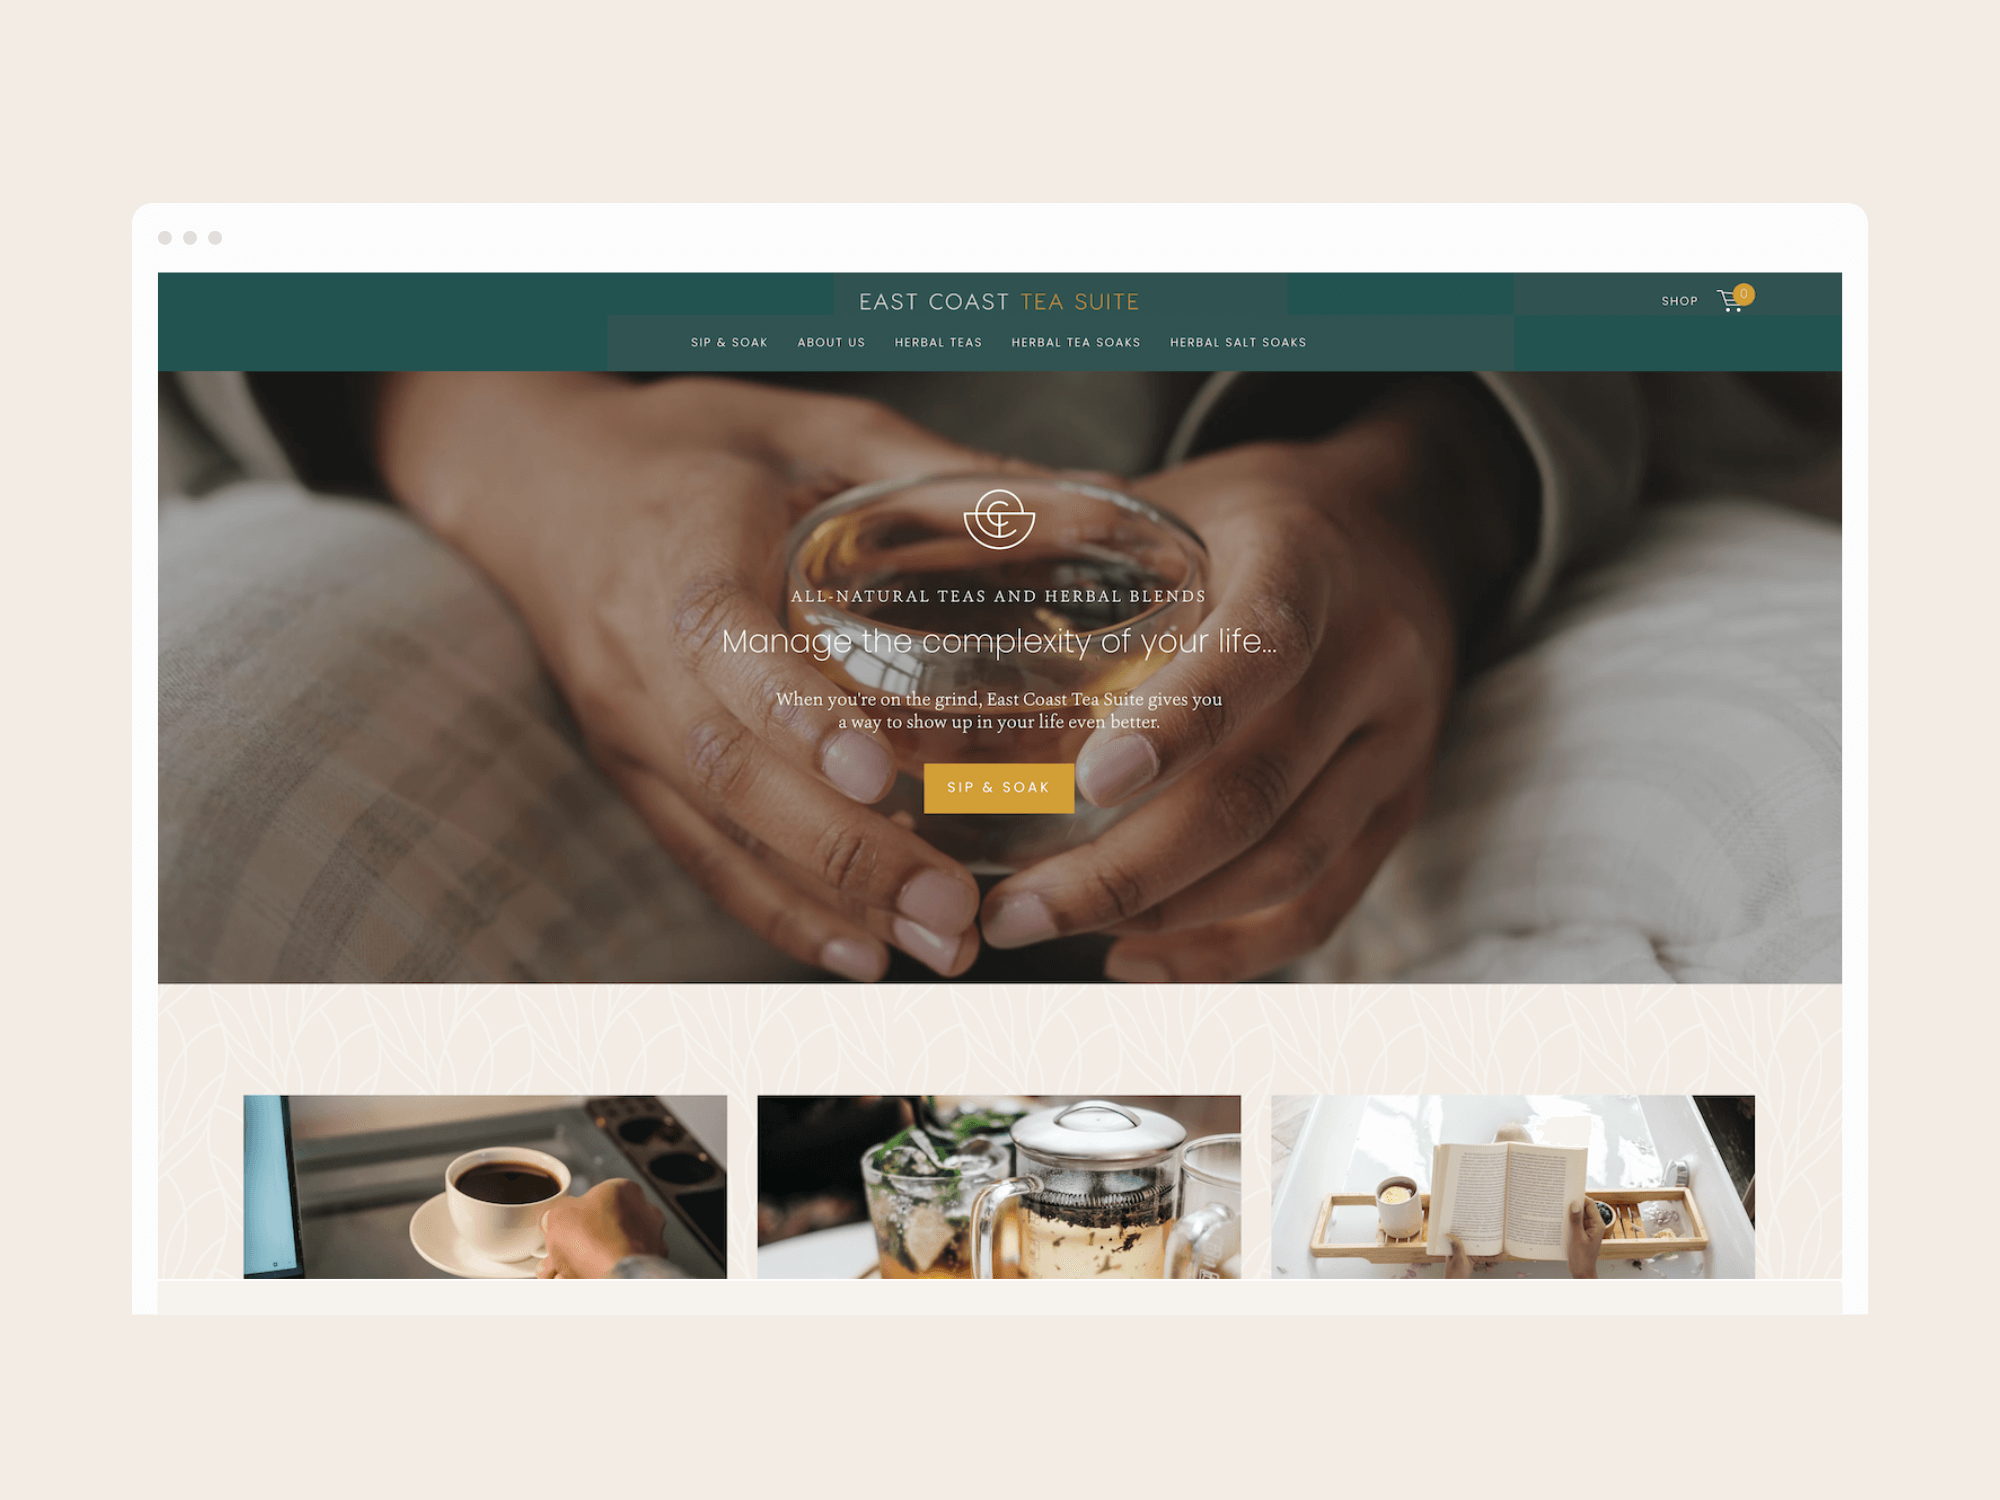 East Coast Tea Suite brand and website design by Alexa B. Taylor